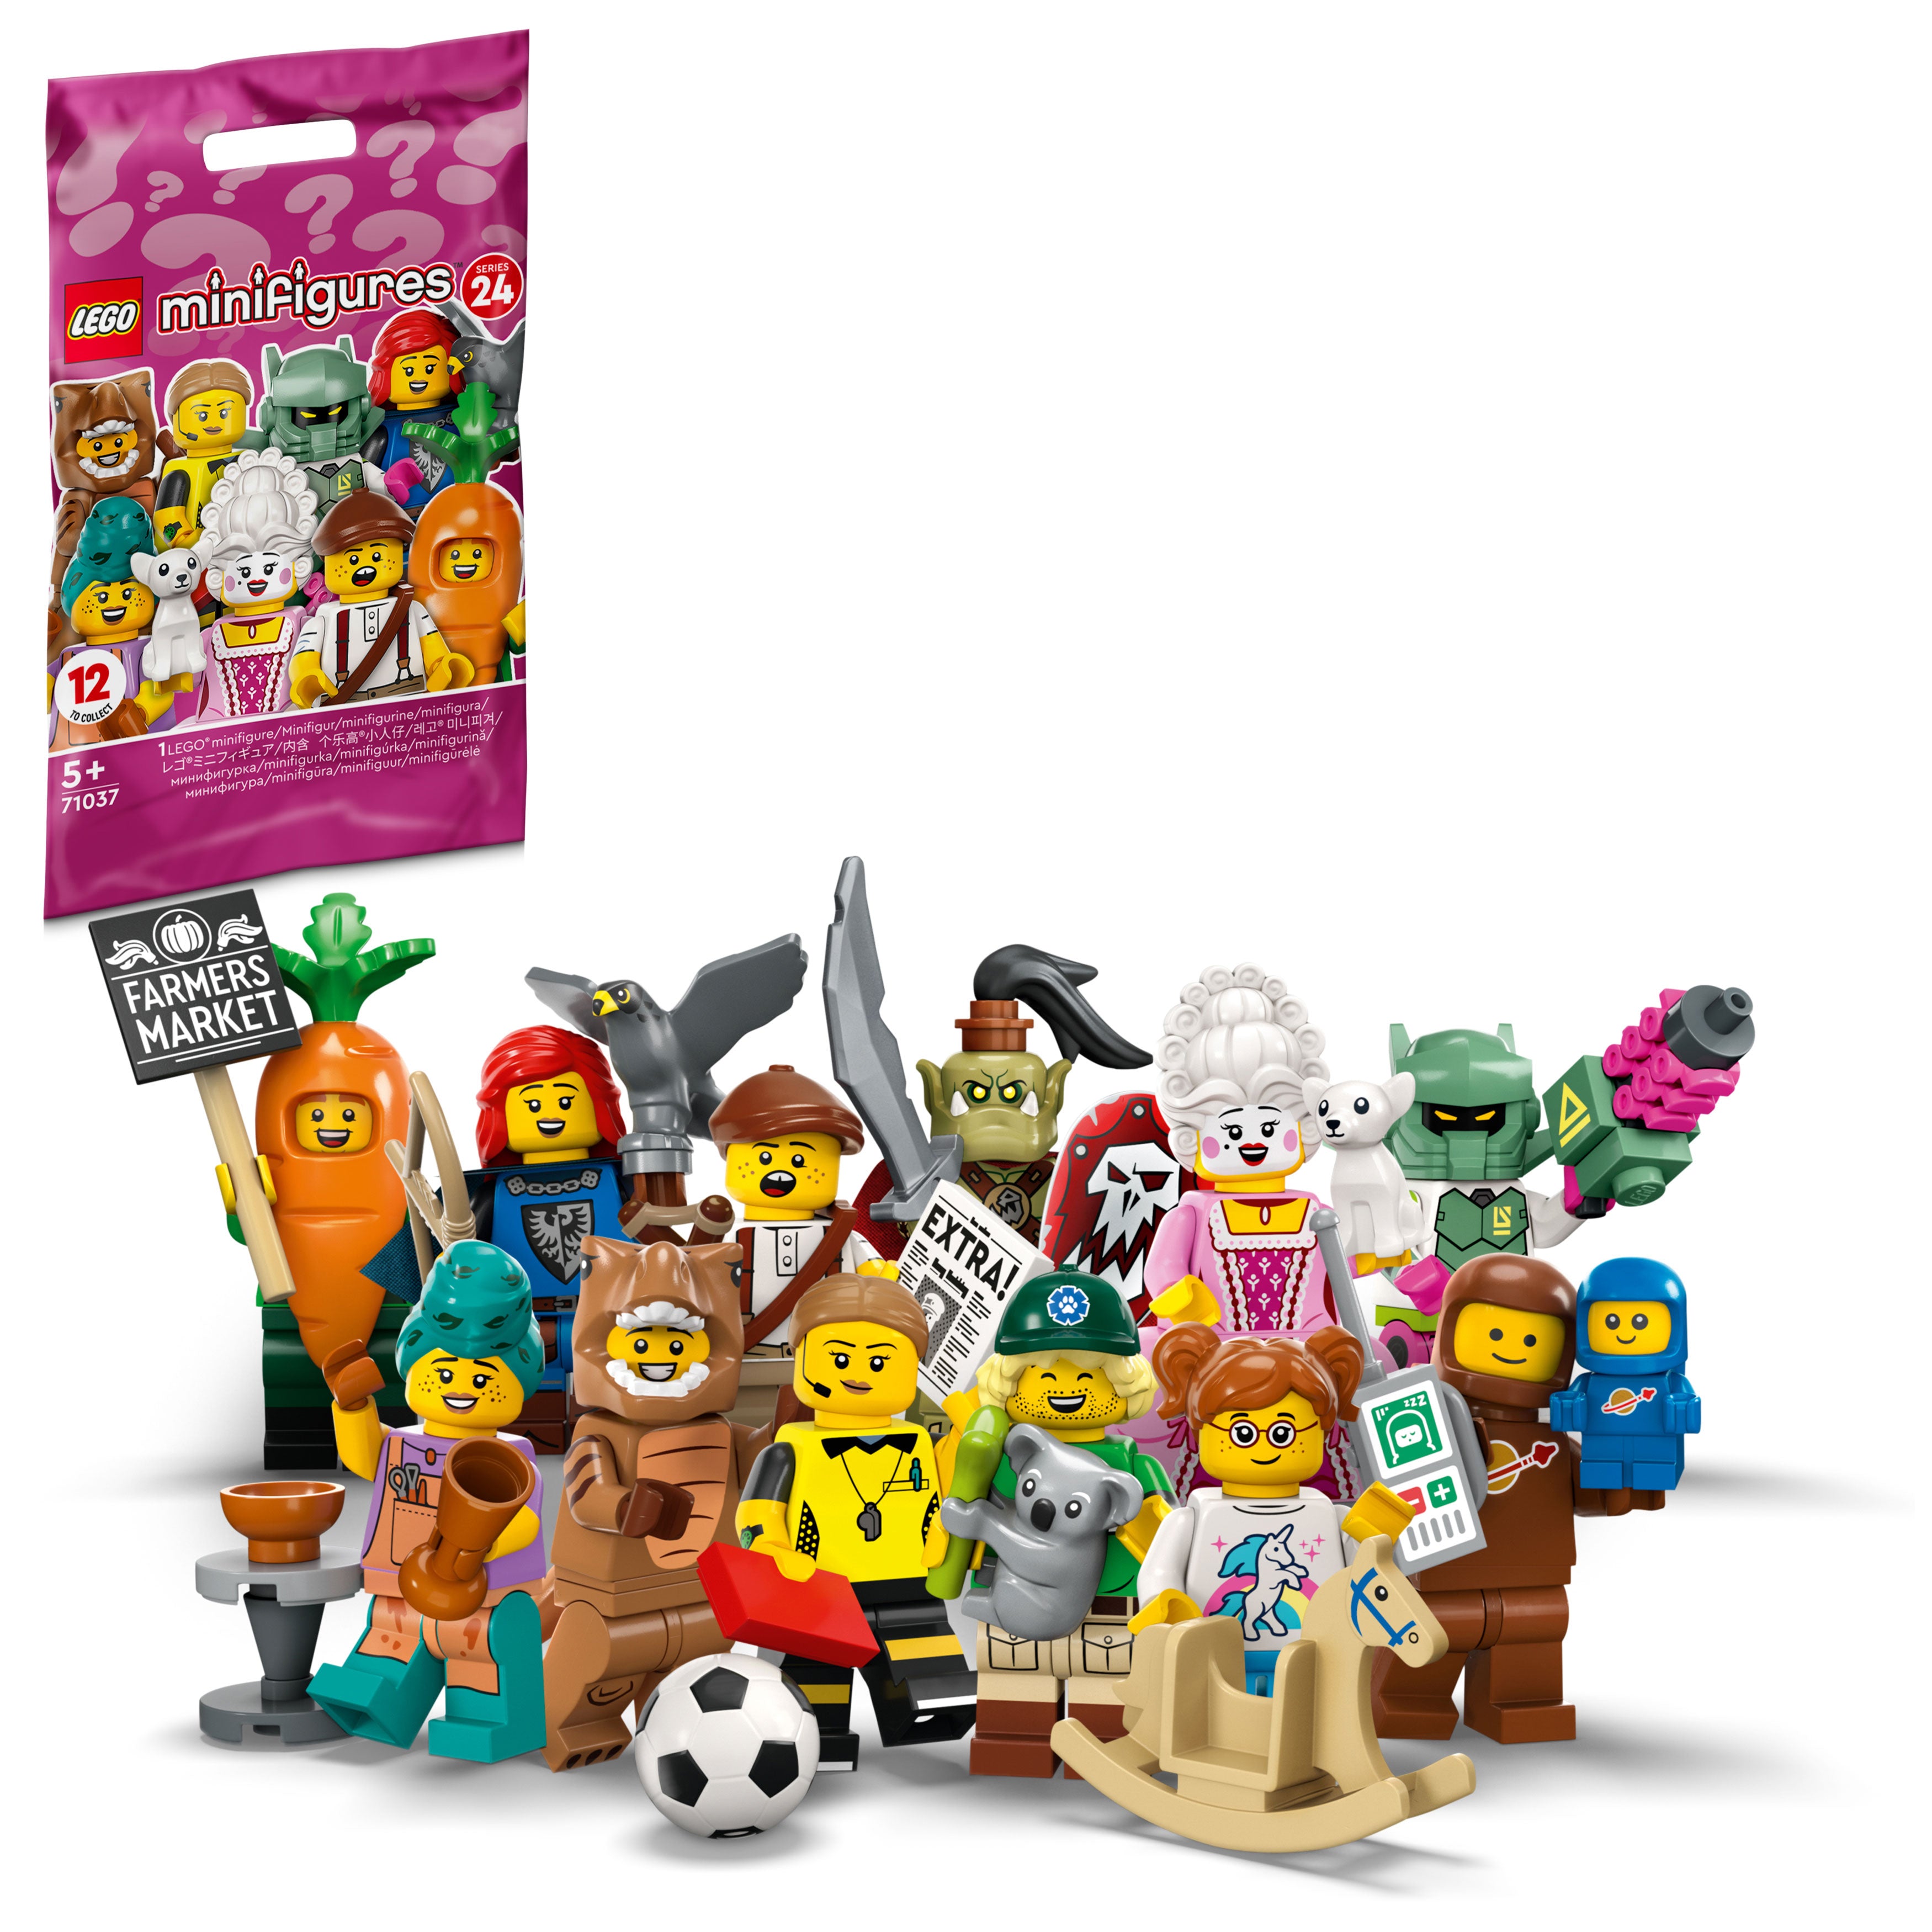 Lego 71037 Minifigures Series 24